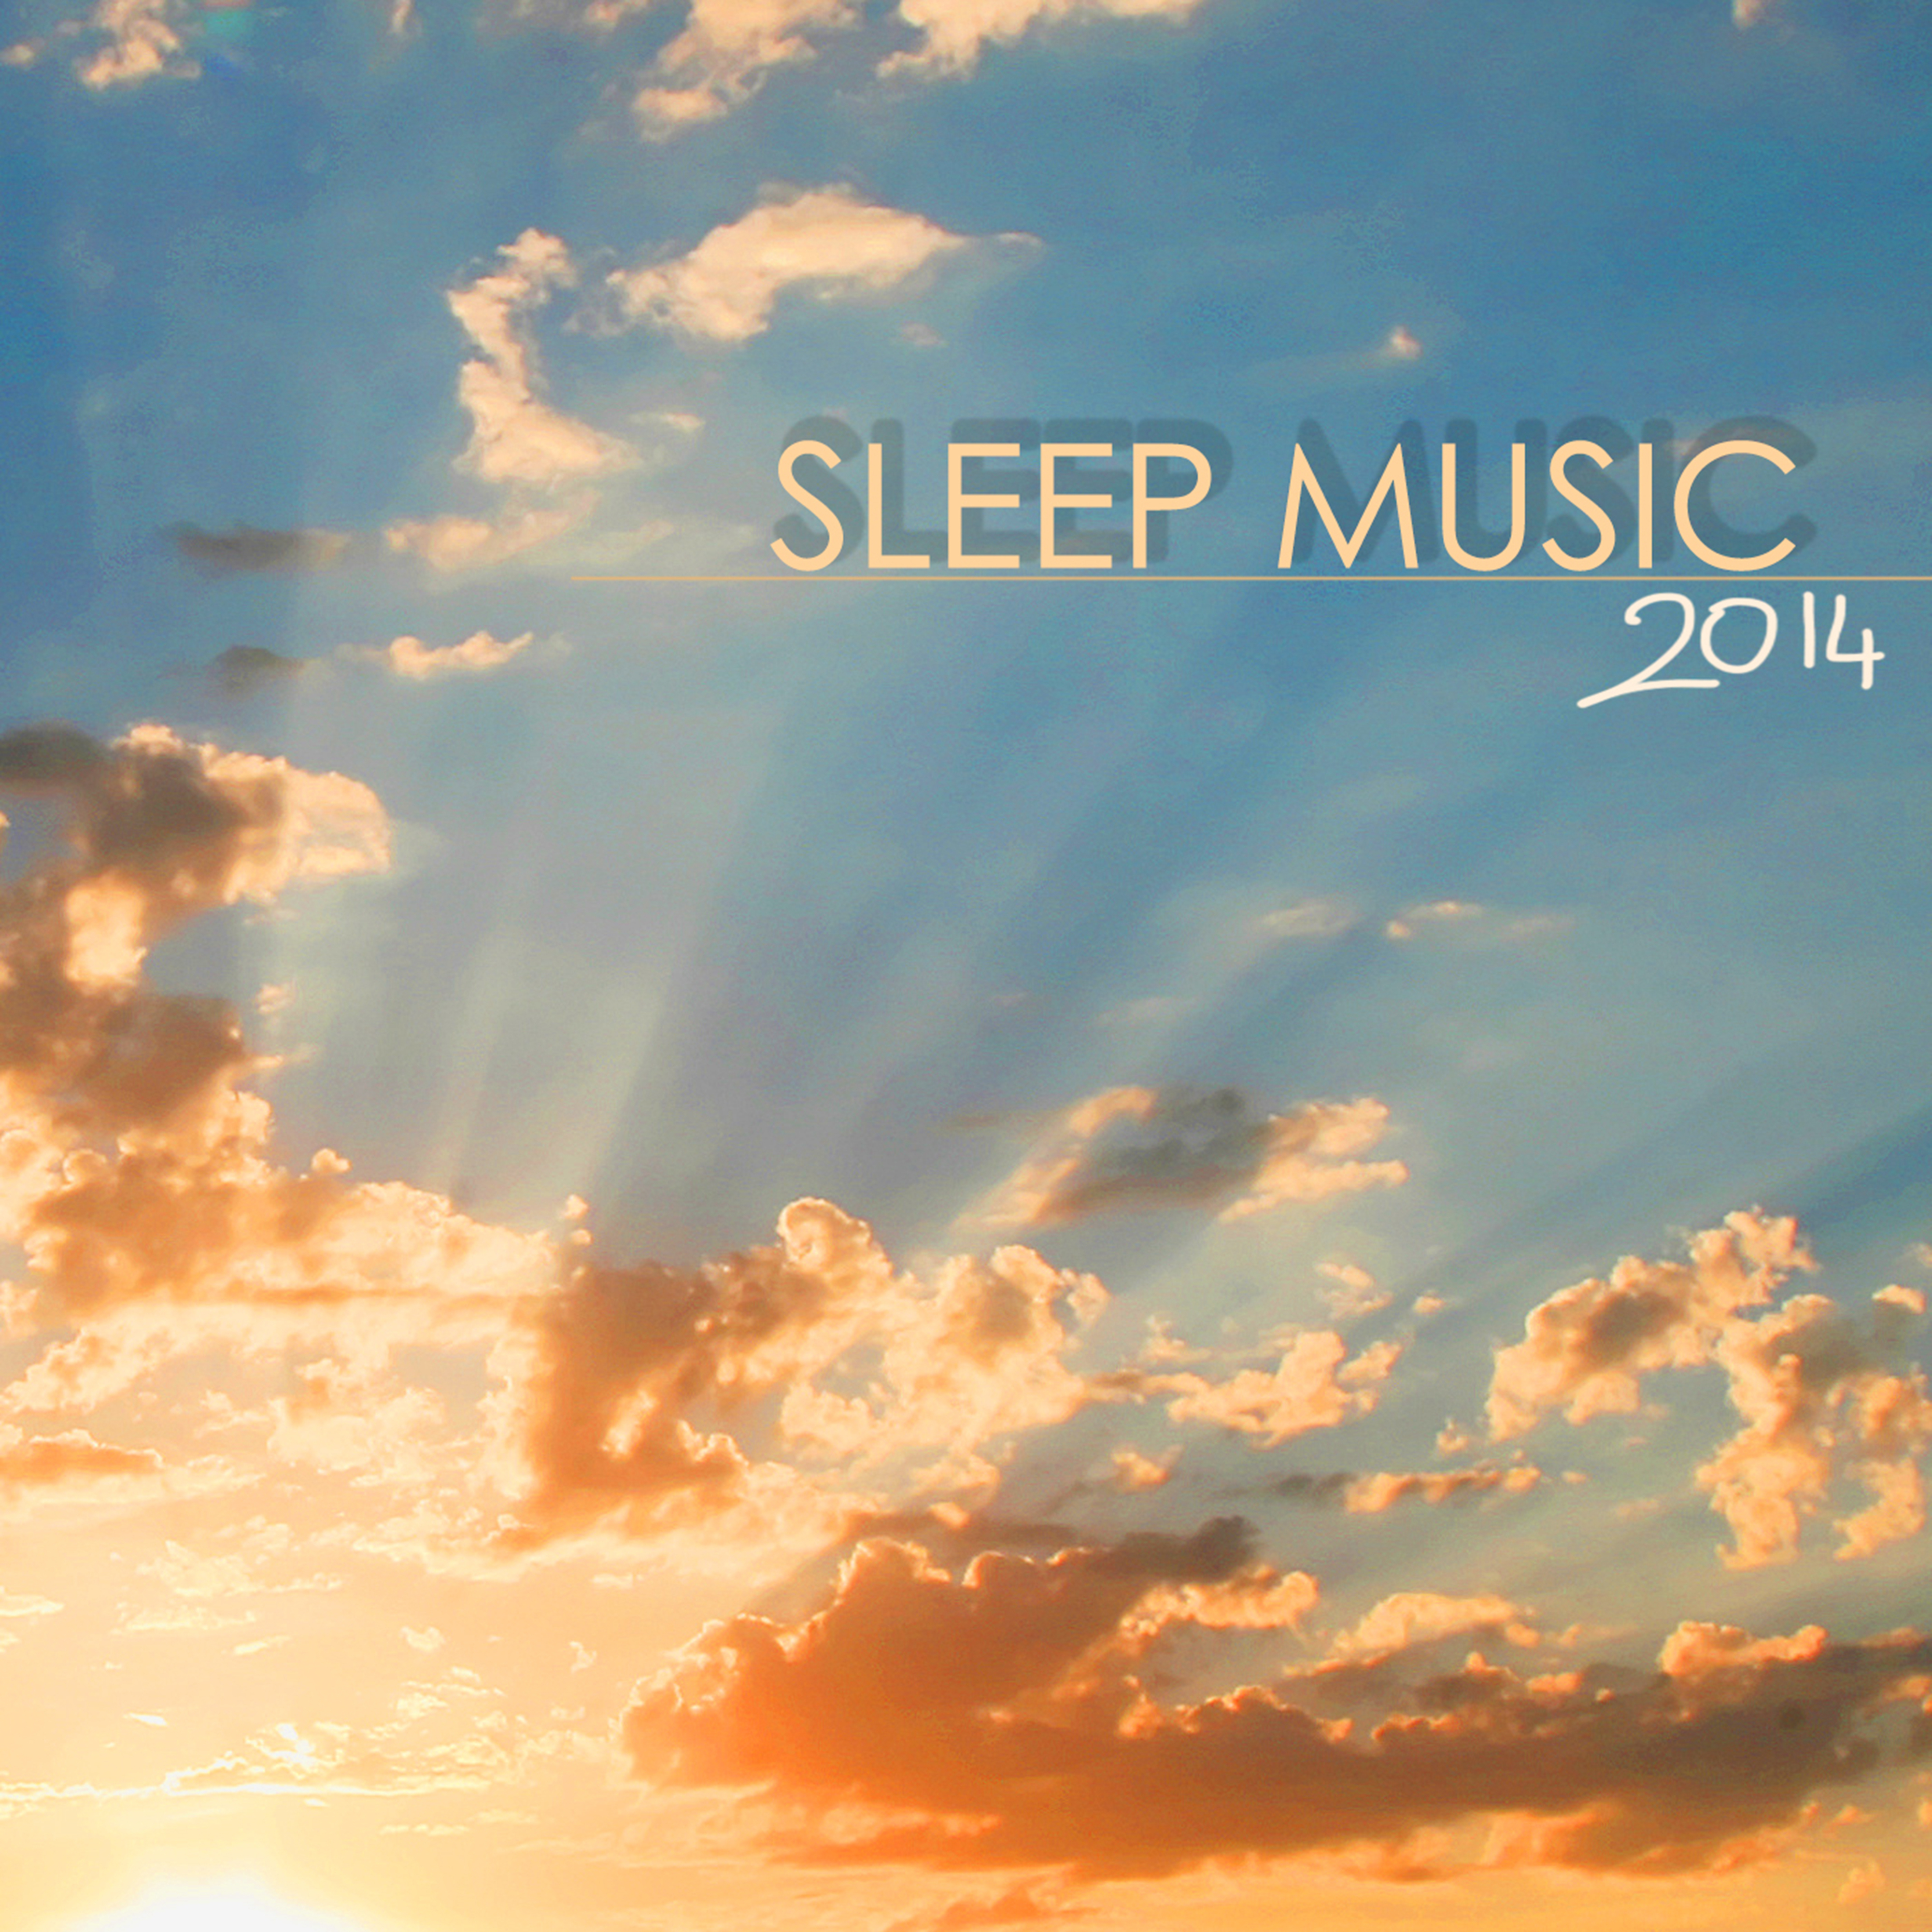 Sounds of Nature Sleep Music - Deep Relaxation for Sleeping